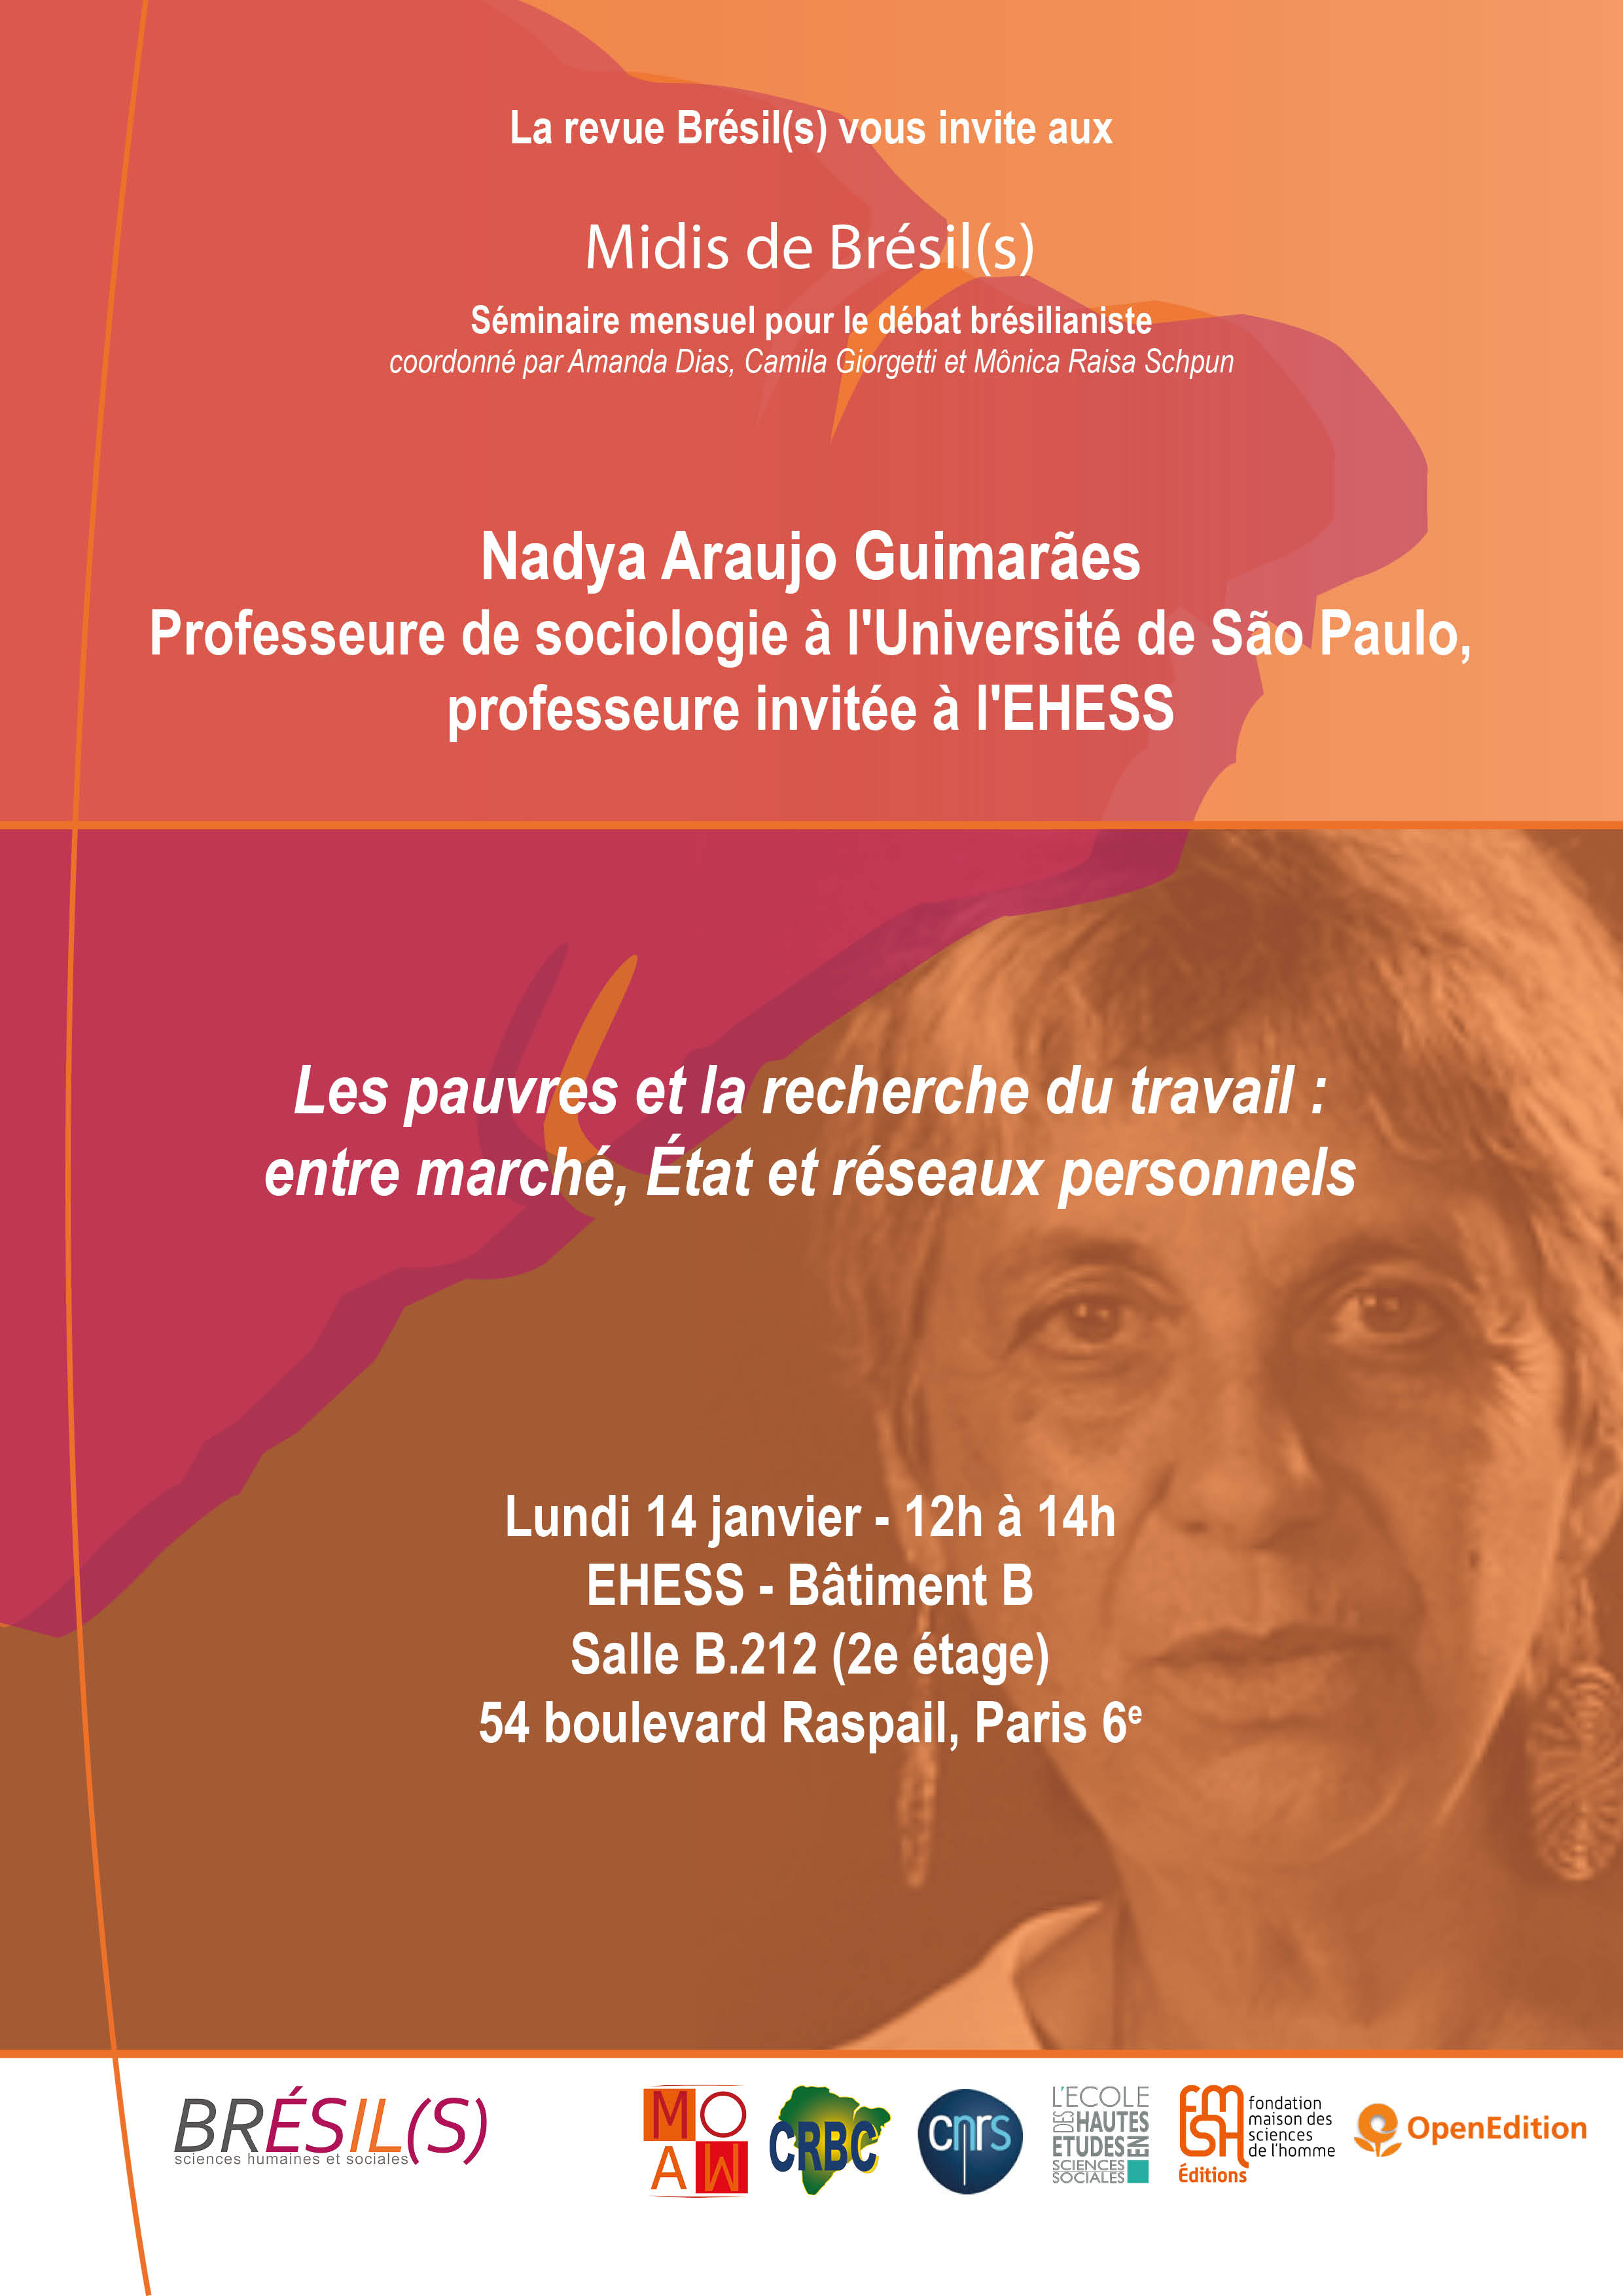 Les Midis de Brésil(s) - Nadya Araujo Guimarães, Professeure invitée à l'EHESS, Université de São Paulo 